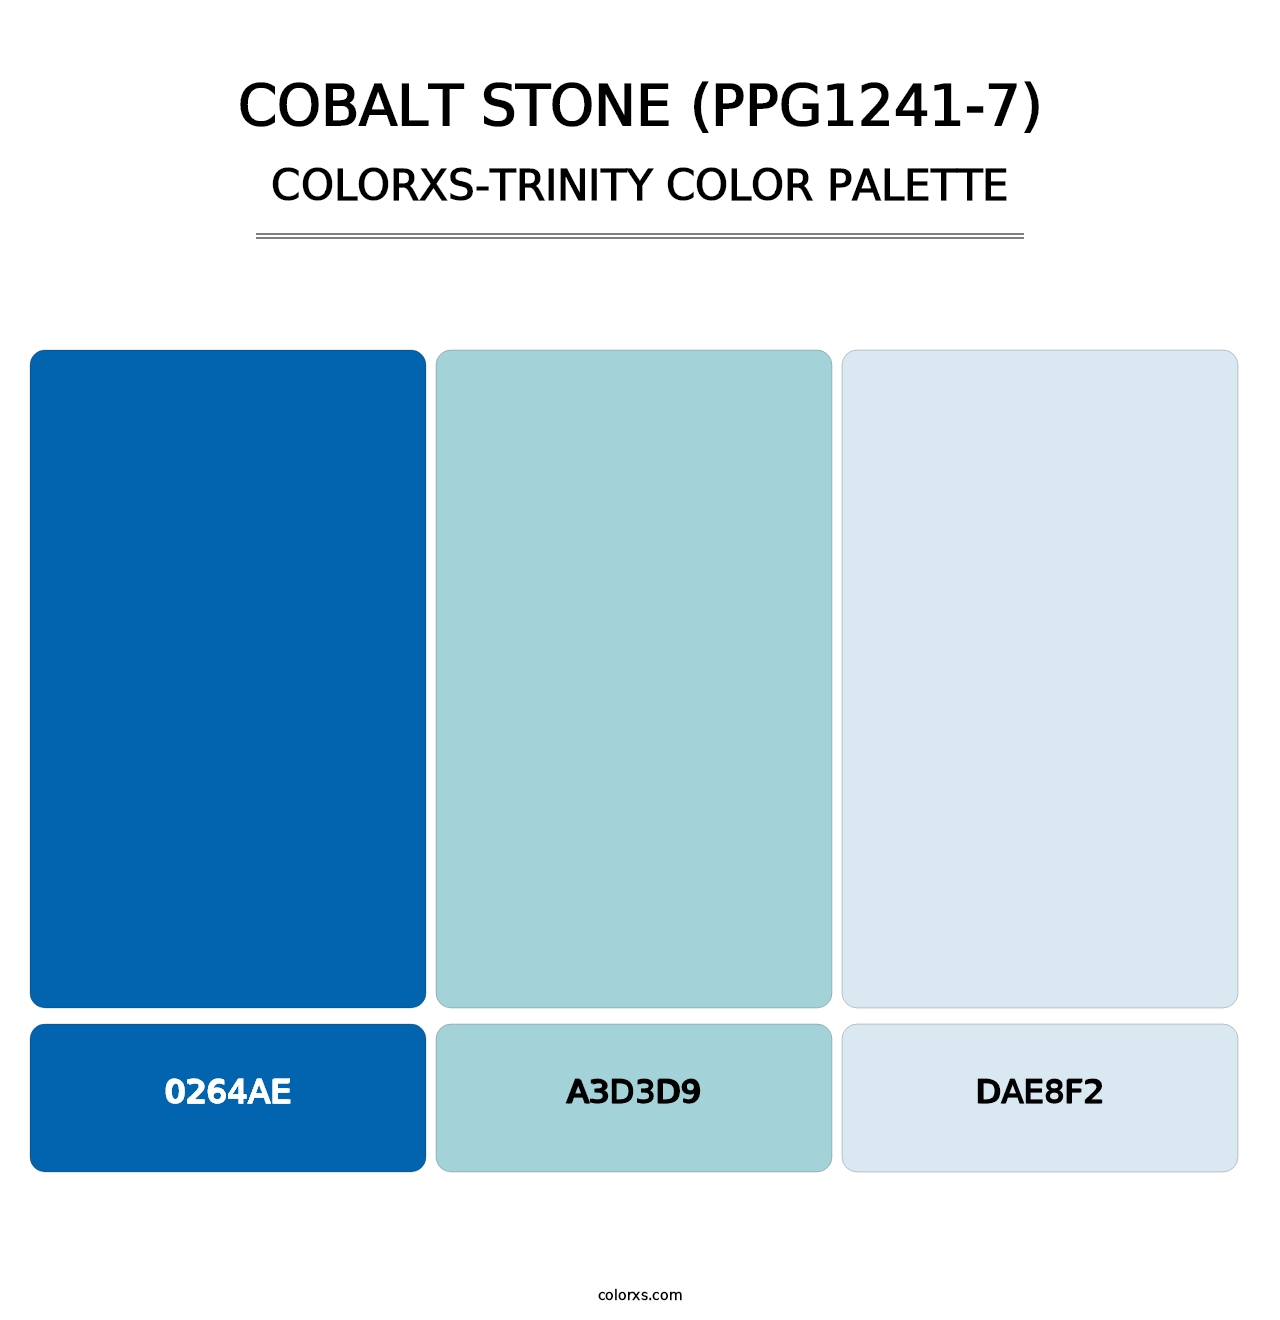 Cobalt Stone (PPG1241-7) - Colorxs Trinity Palette